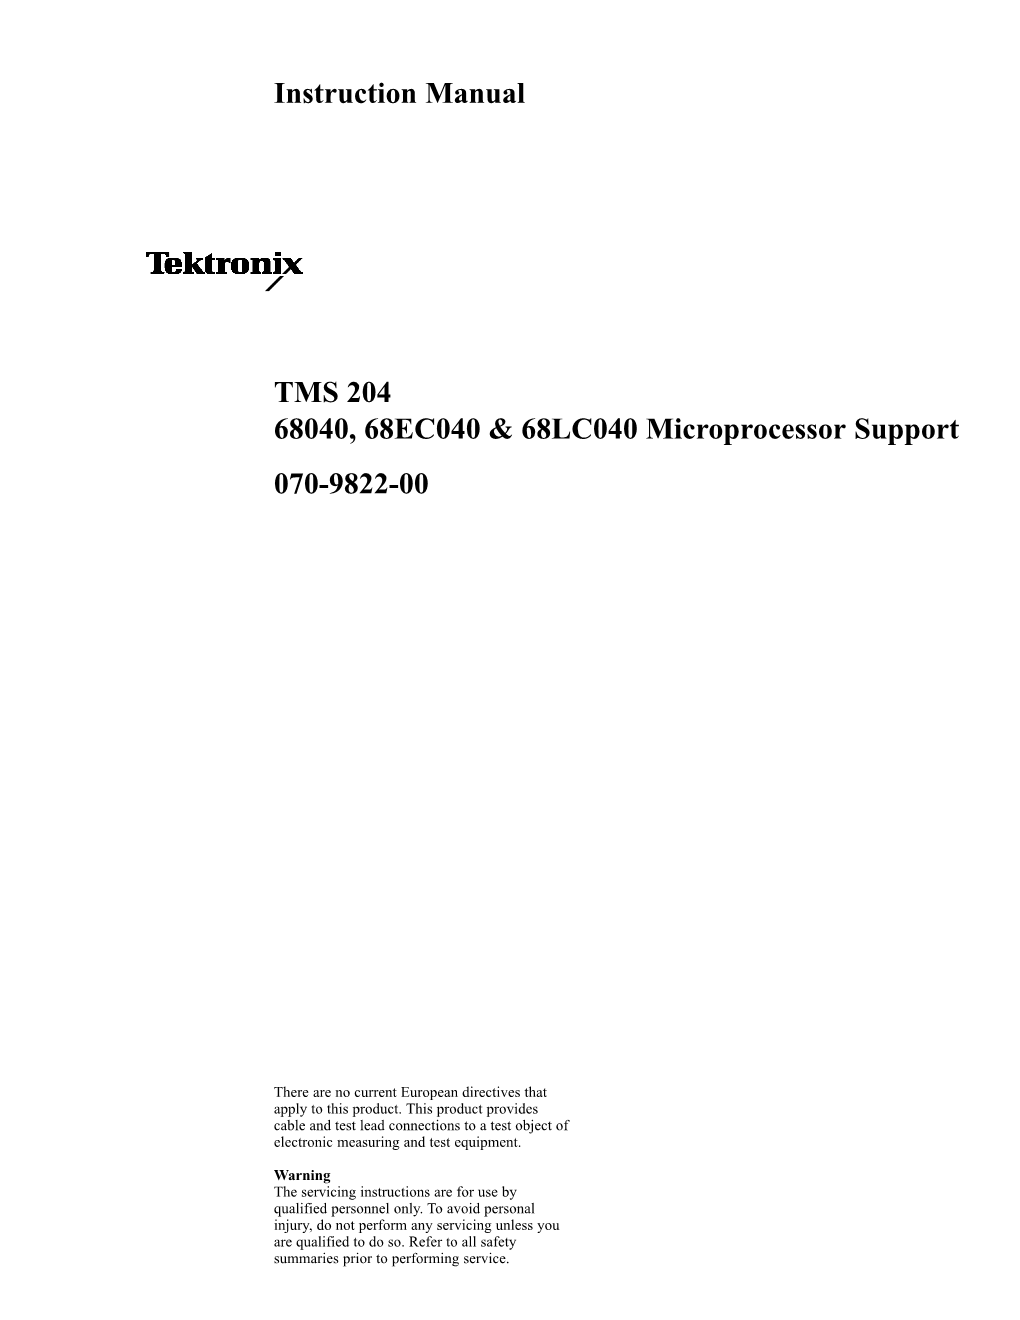 Instruction Manual TMS 204 68040, 68EC040 & 68LC040